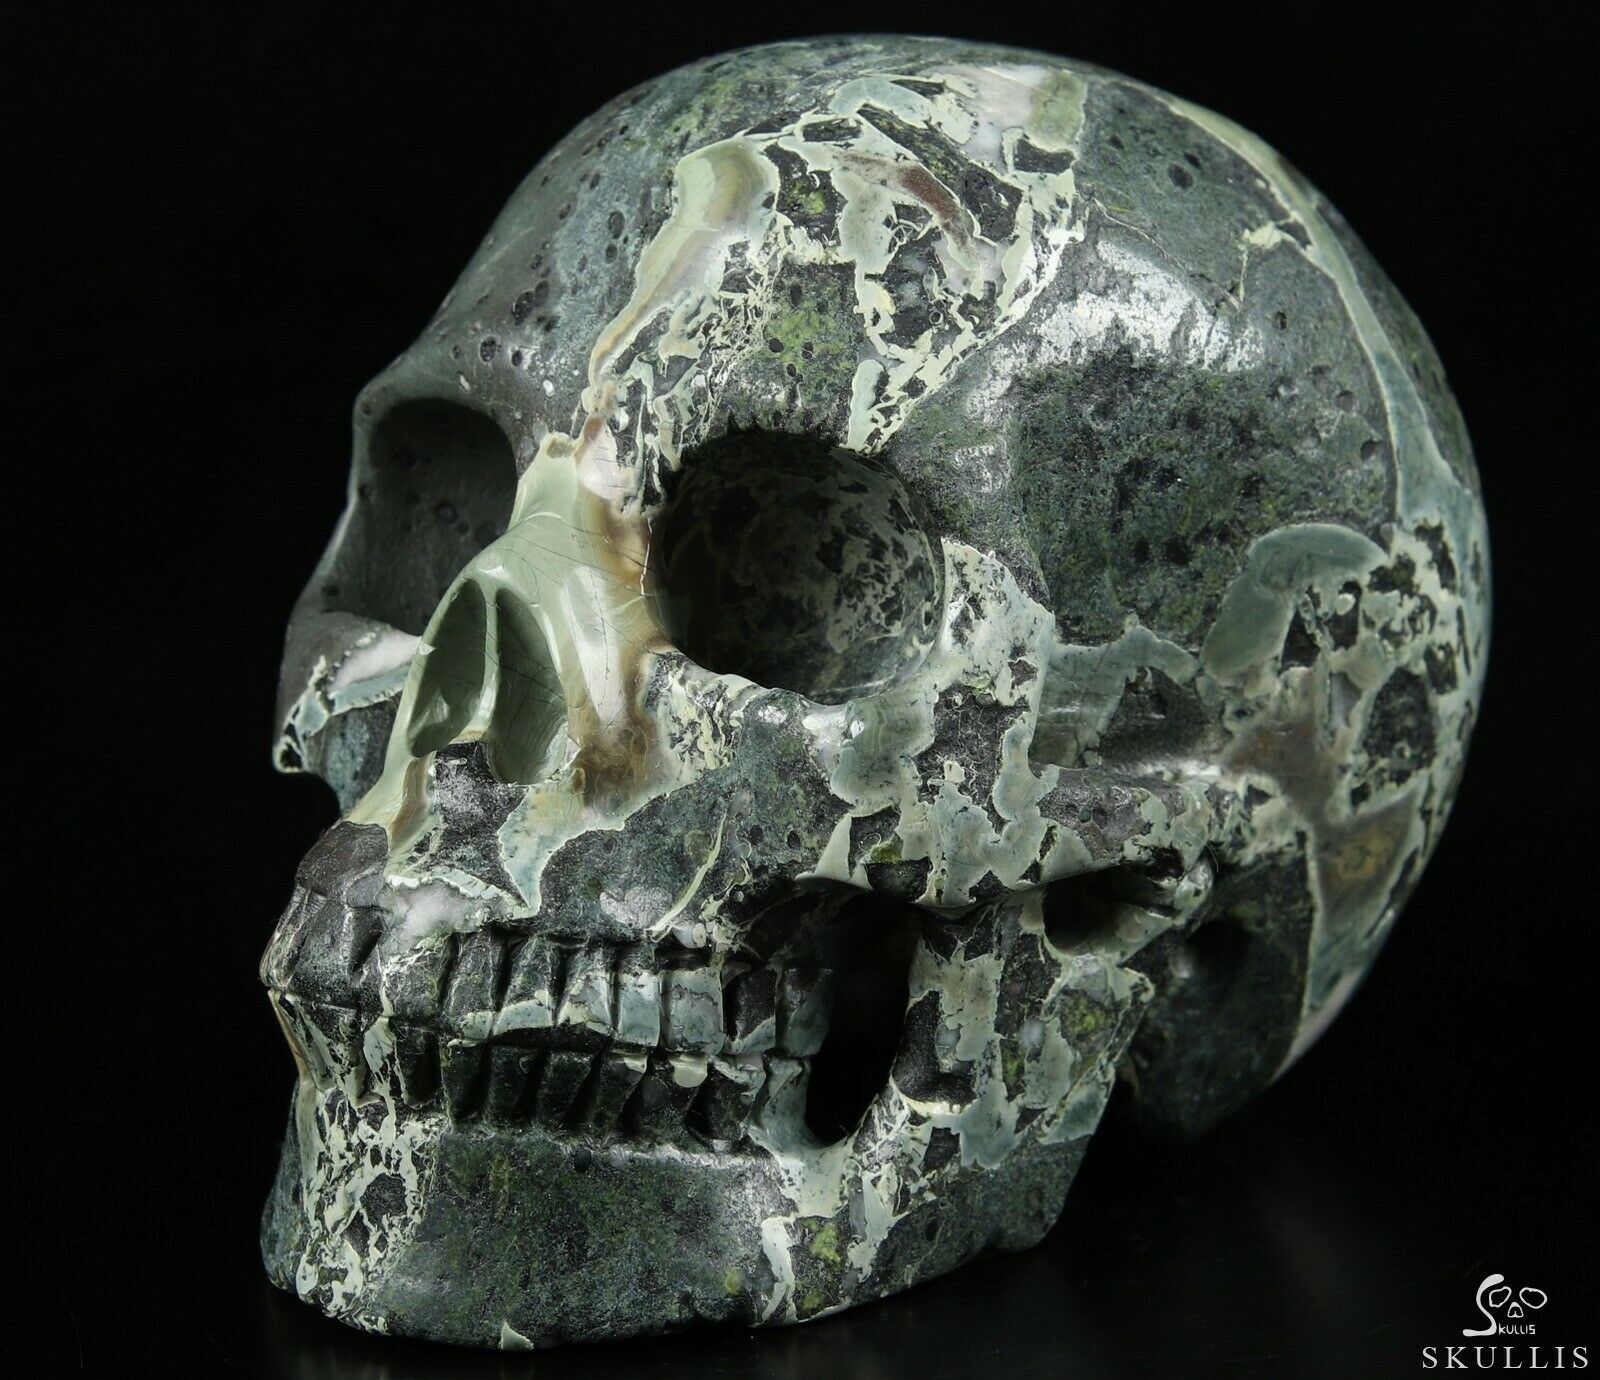 5.0" Camouflage Jasper Carved Crystal Skull, Realistic, Crystal Healing